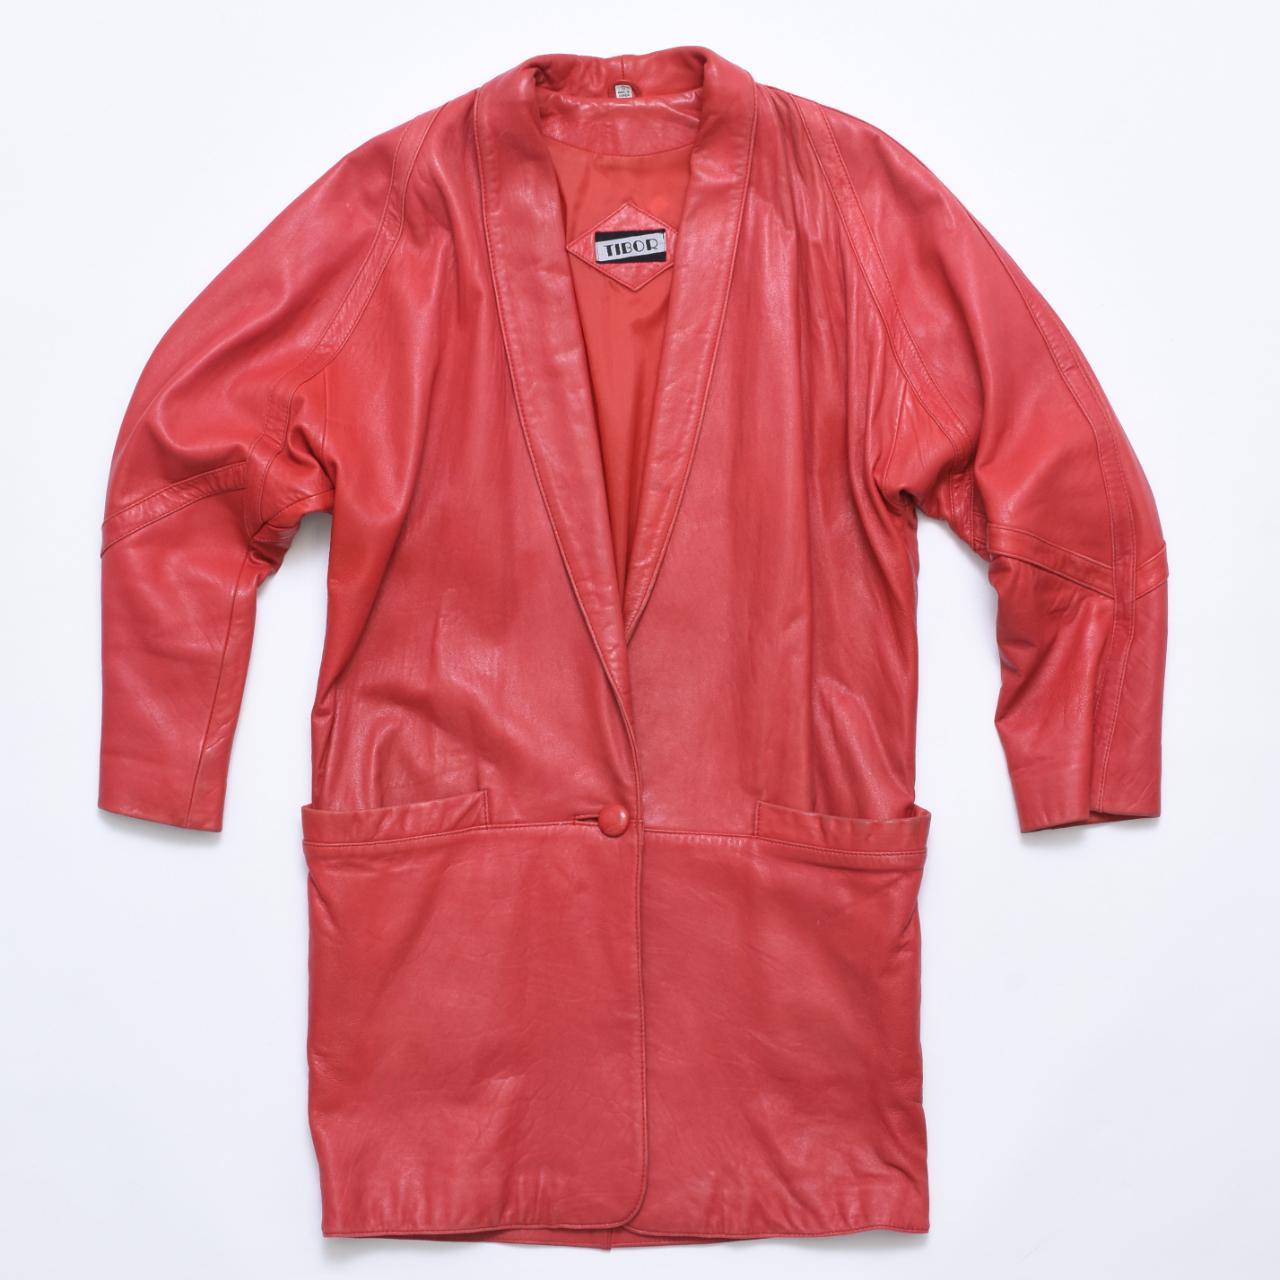 Women's Red Jacket